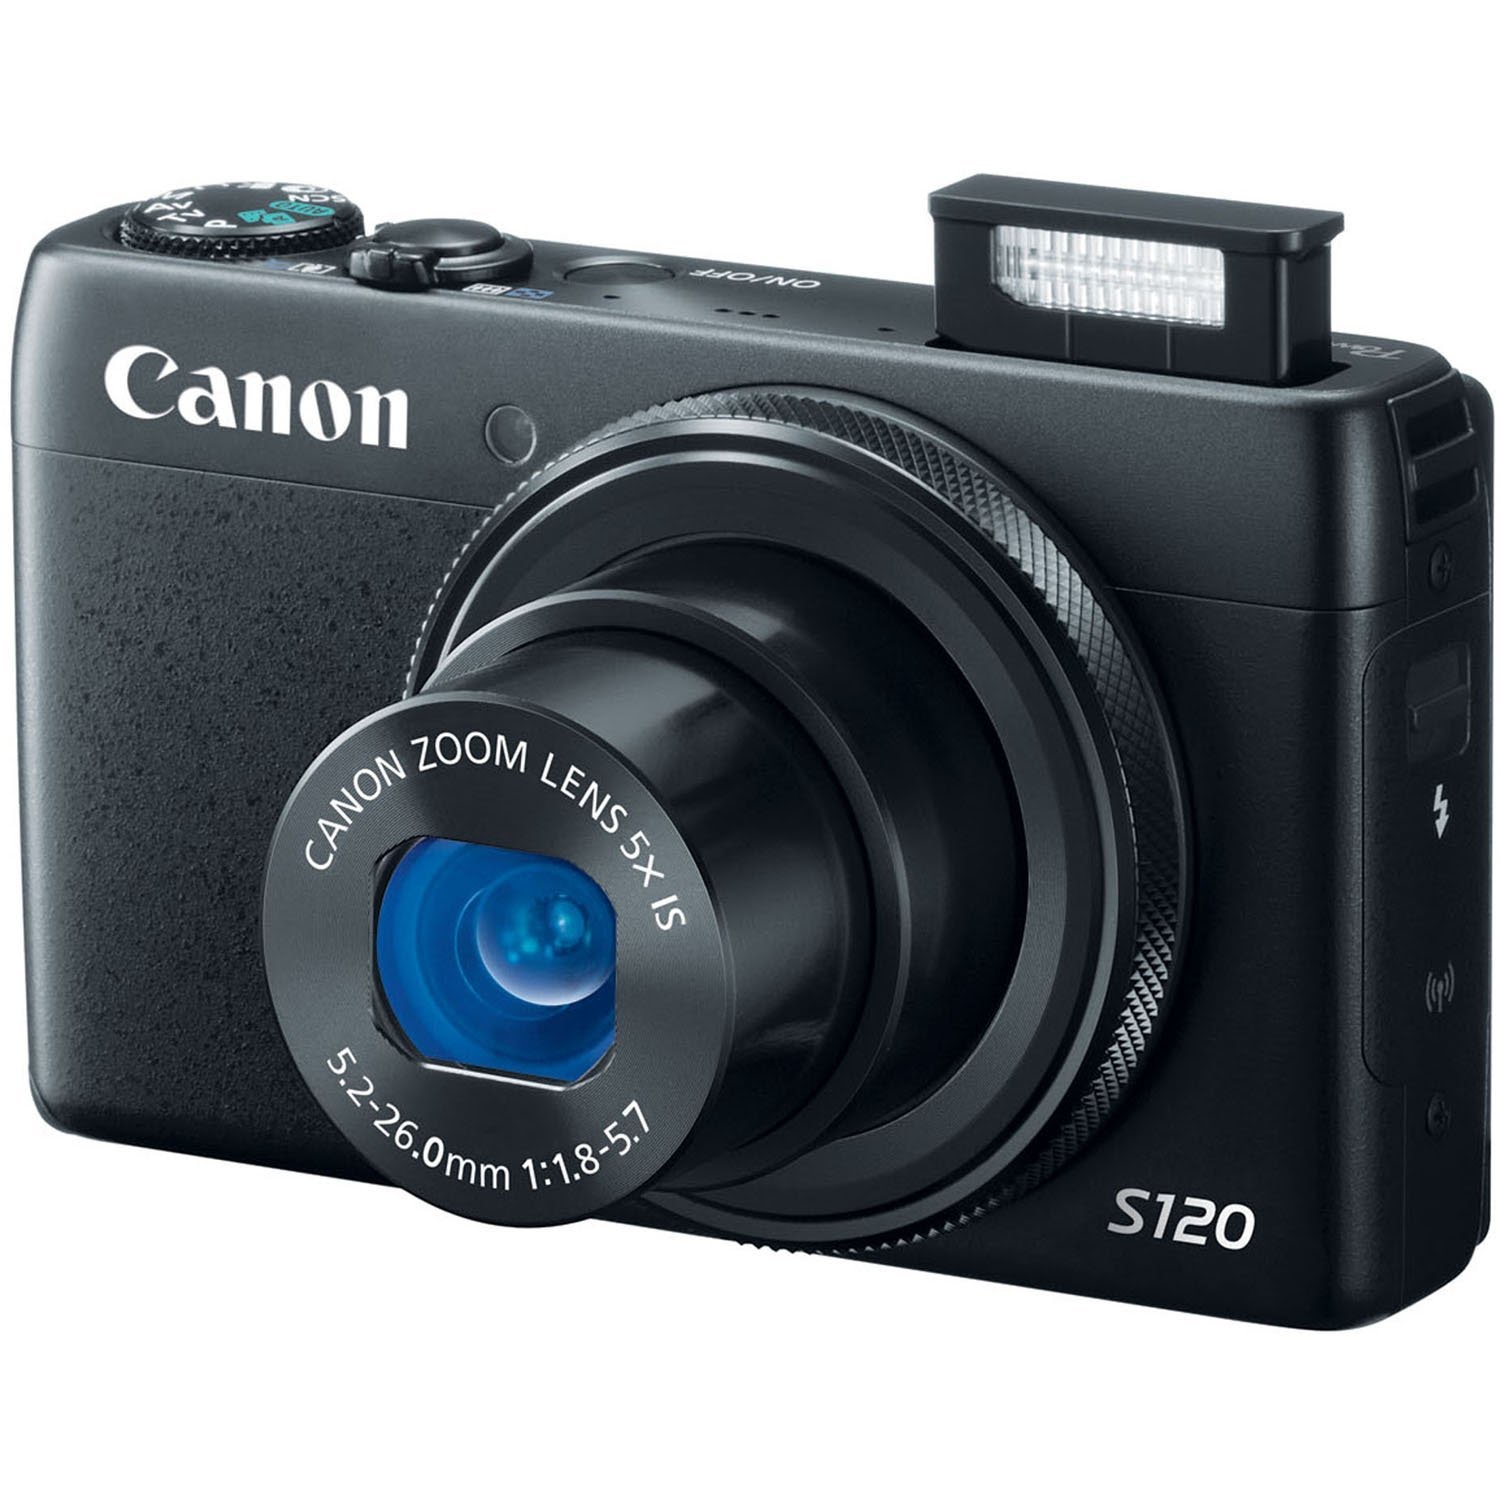 Canon PowerShot S120 12 1 MP CMOS Digital Camera